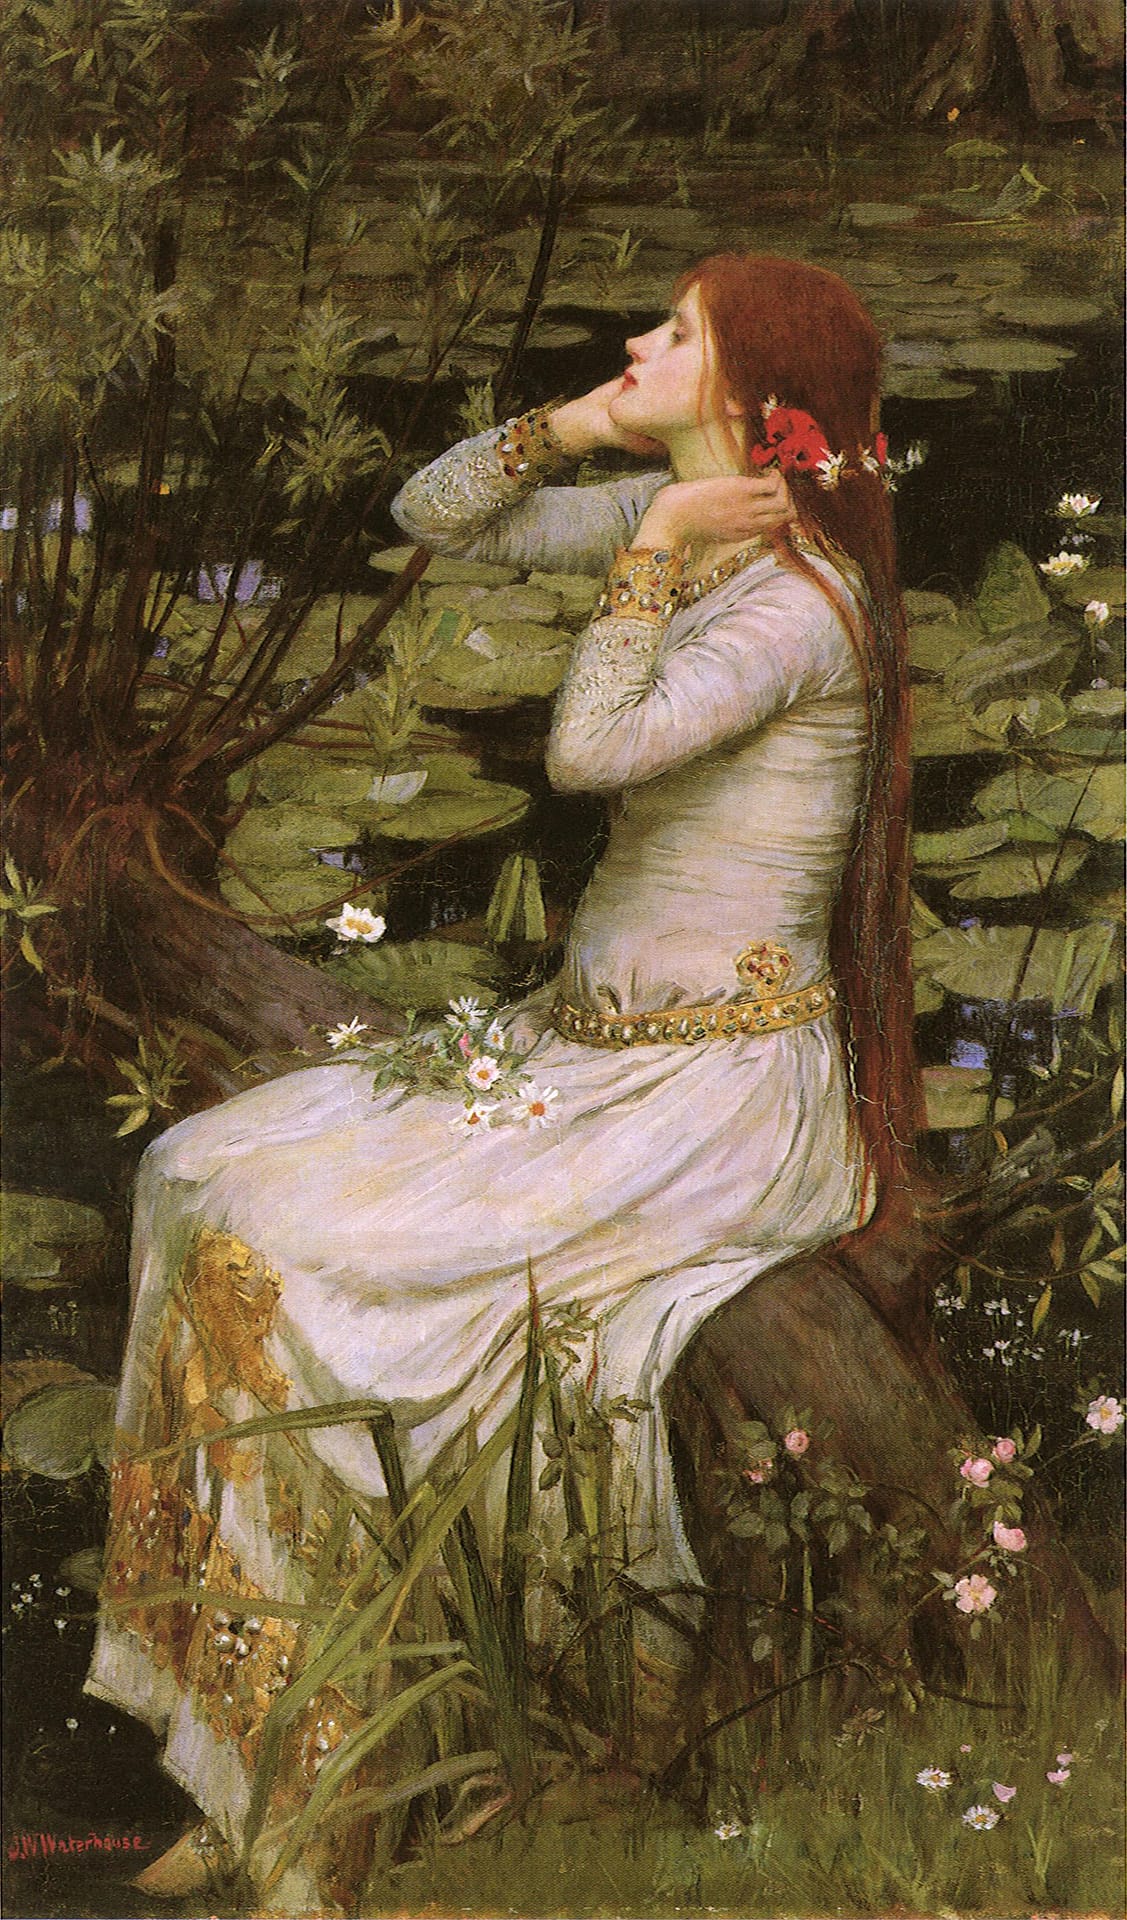 Ophelia by John William Waterhouse via Wiki Commons